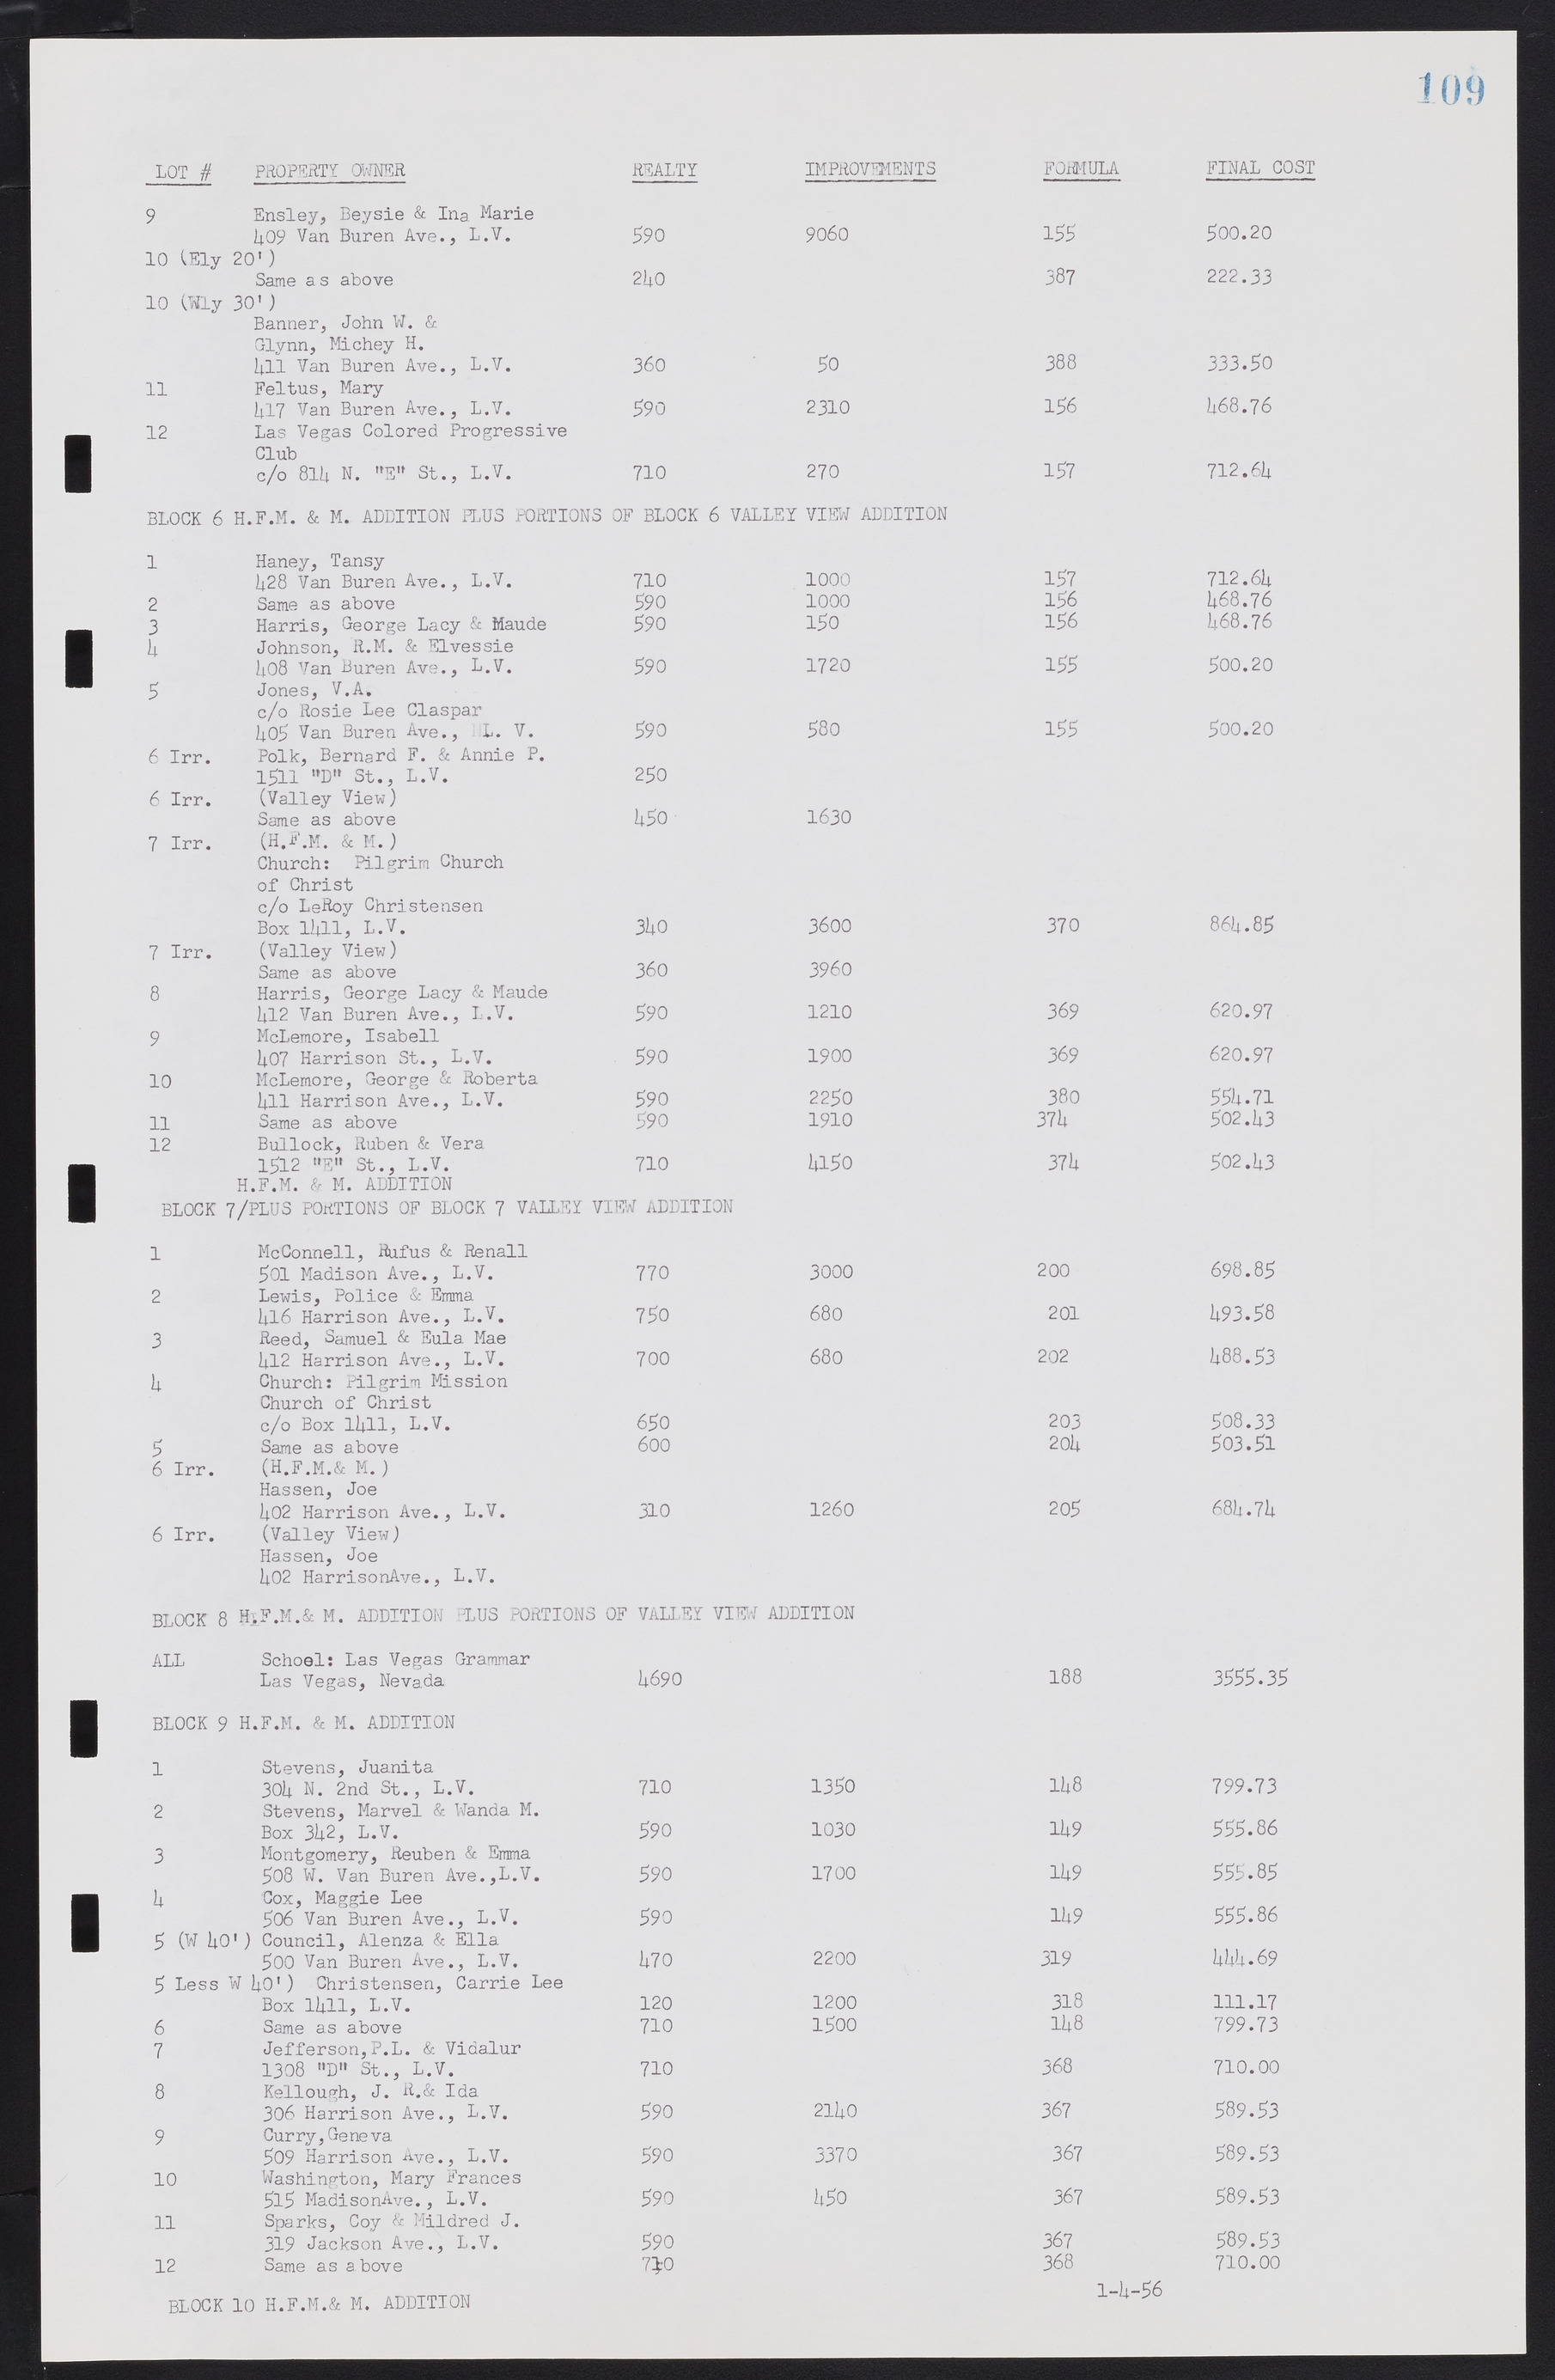 Las Vegas City Commission Minutes, September 21, 1955 to November 20, 1957, lvc000010-119